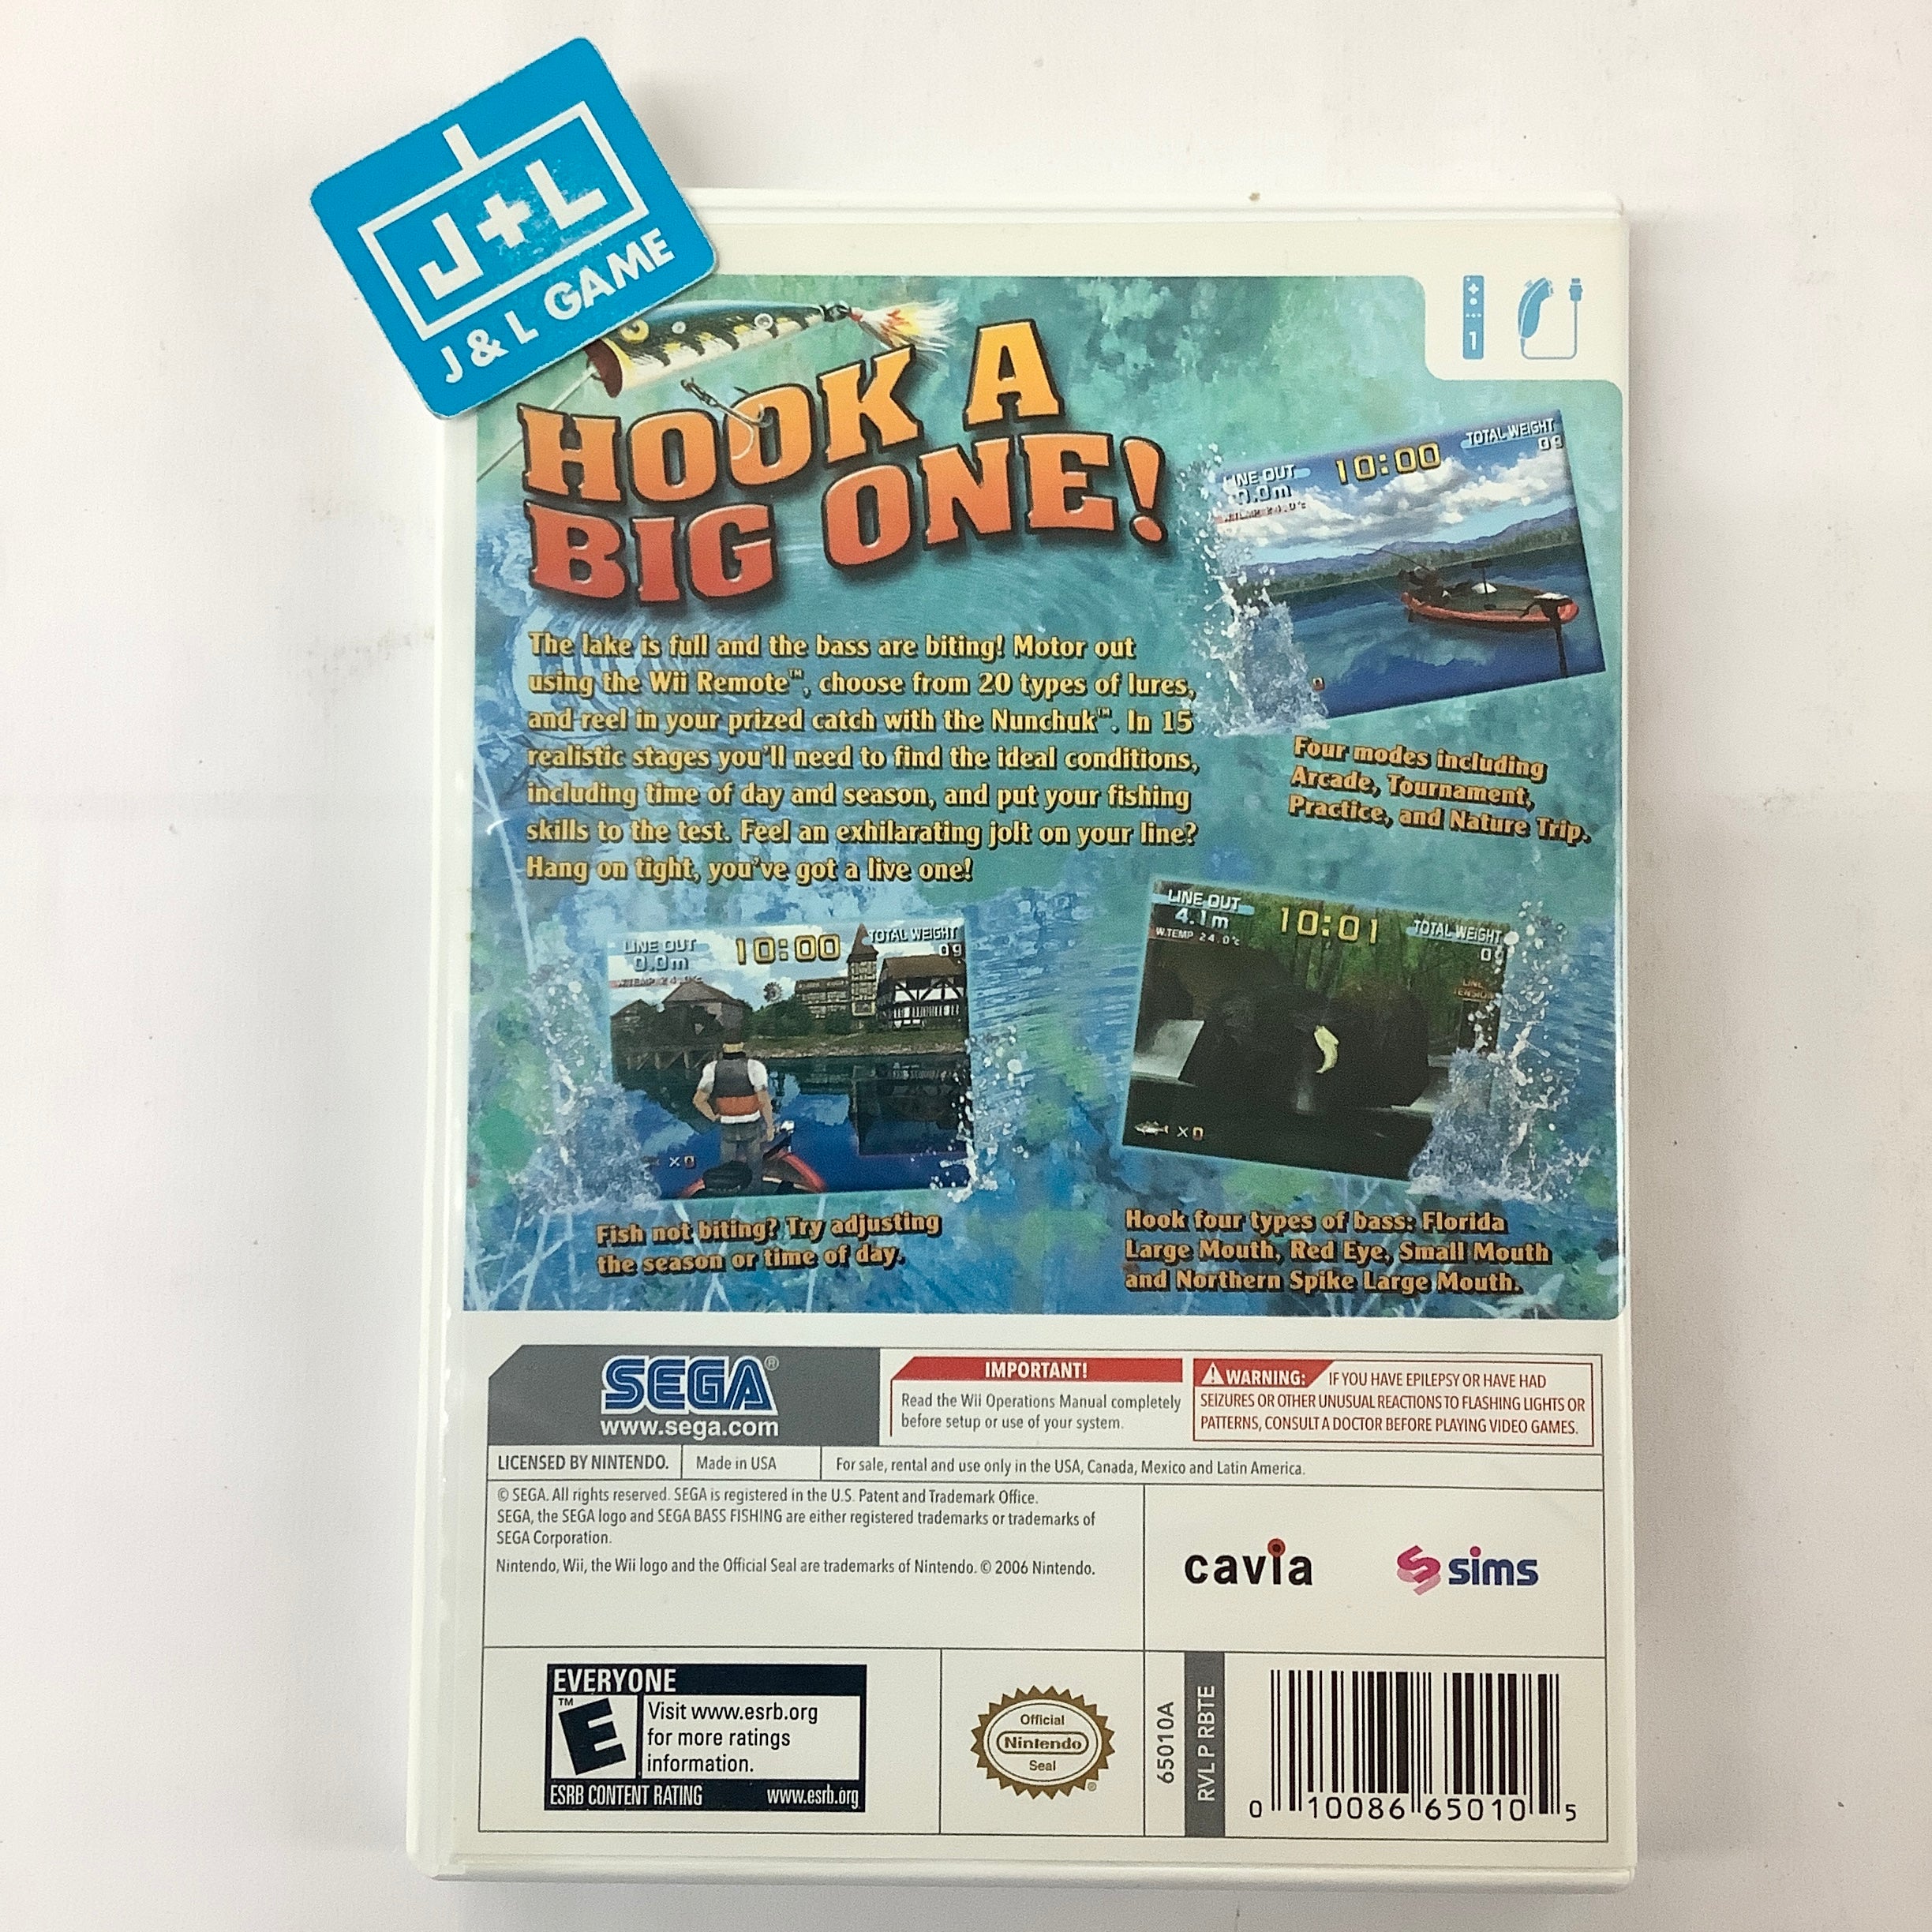 Sega Bass Fishing - Nintendo Wii [Pre-Owned] Video Games Sega   